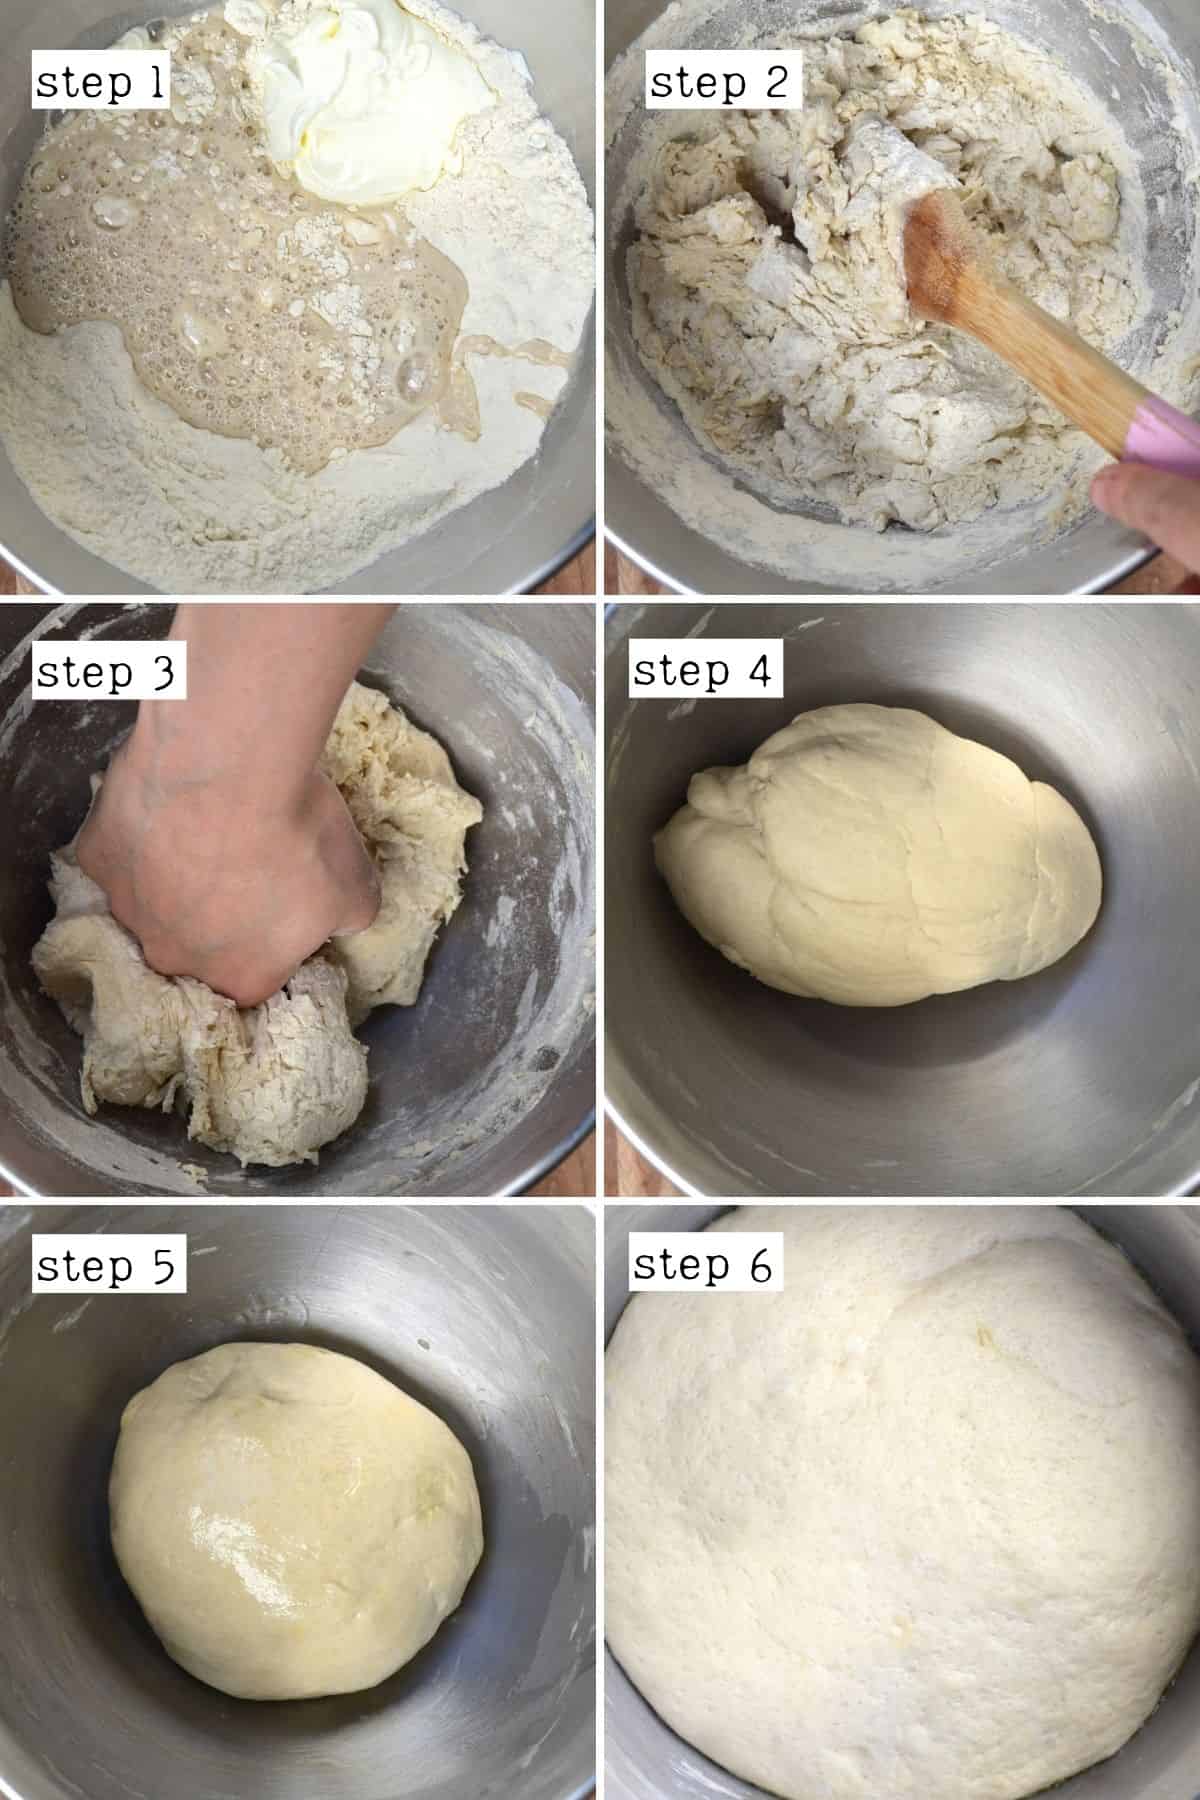 Steps for preparing dough